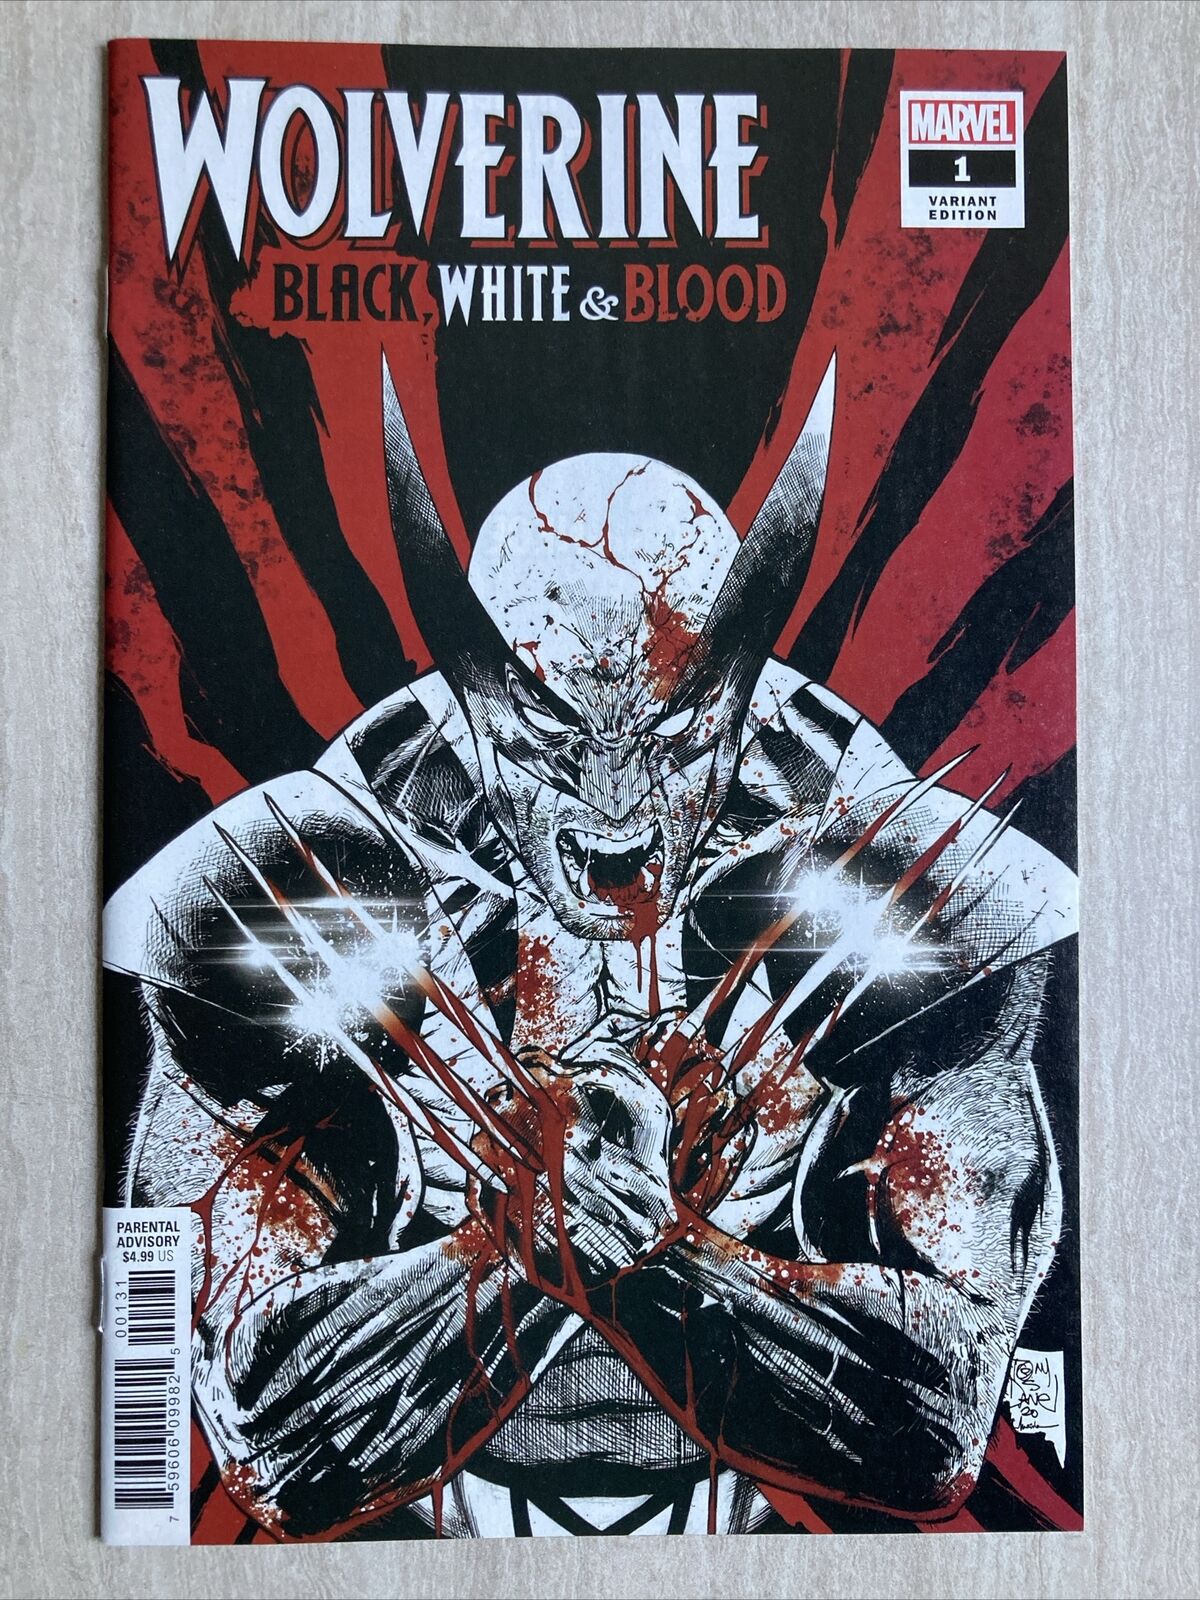 Wolverine Black White Blood #1 (Marvel Comics 2020) Tony Daniel 1:25 Variant